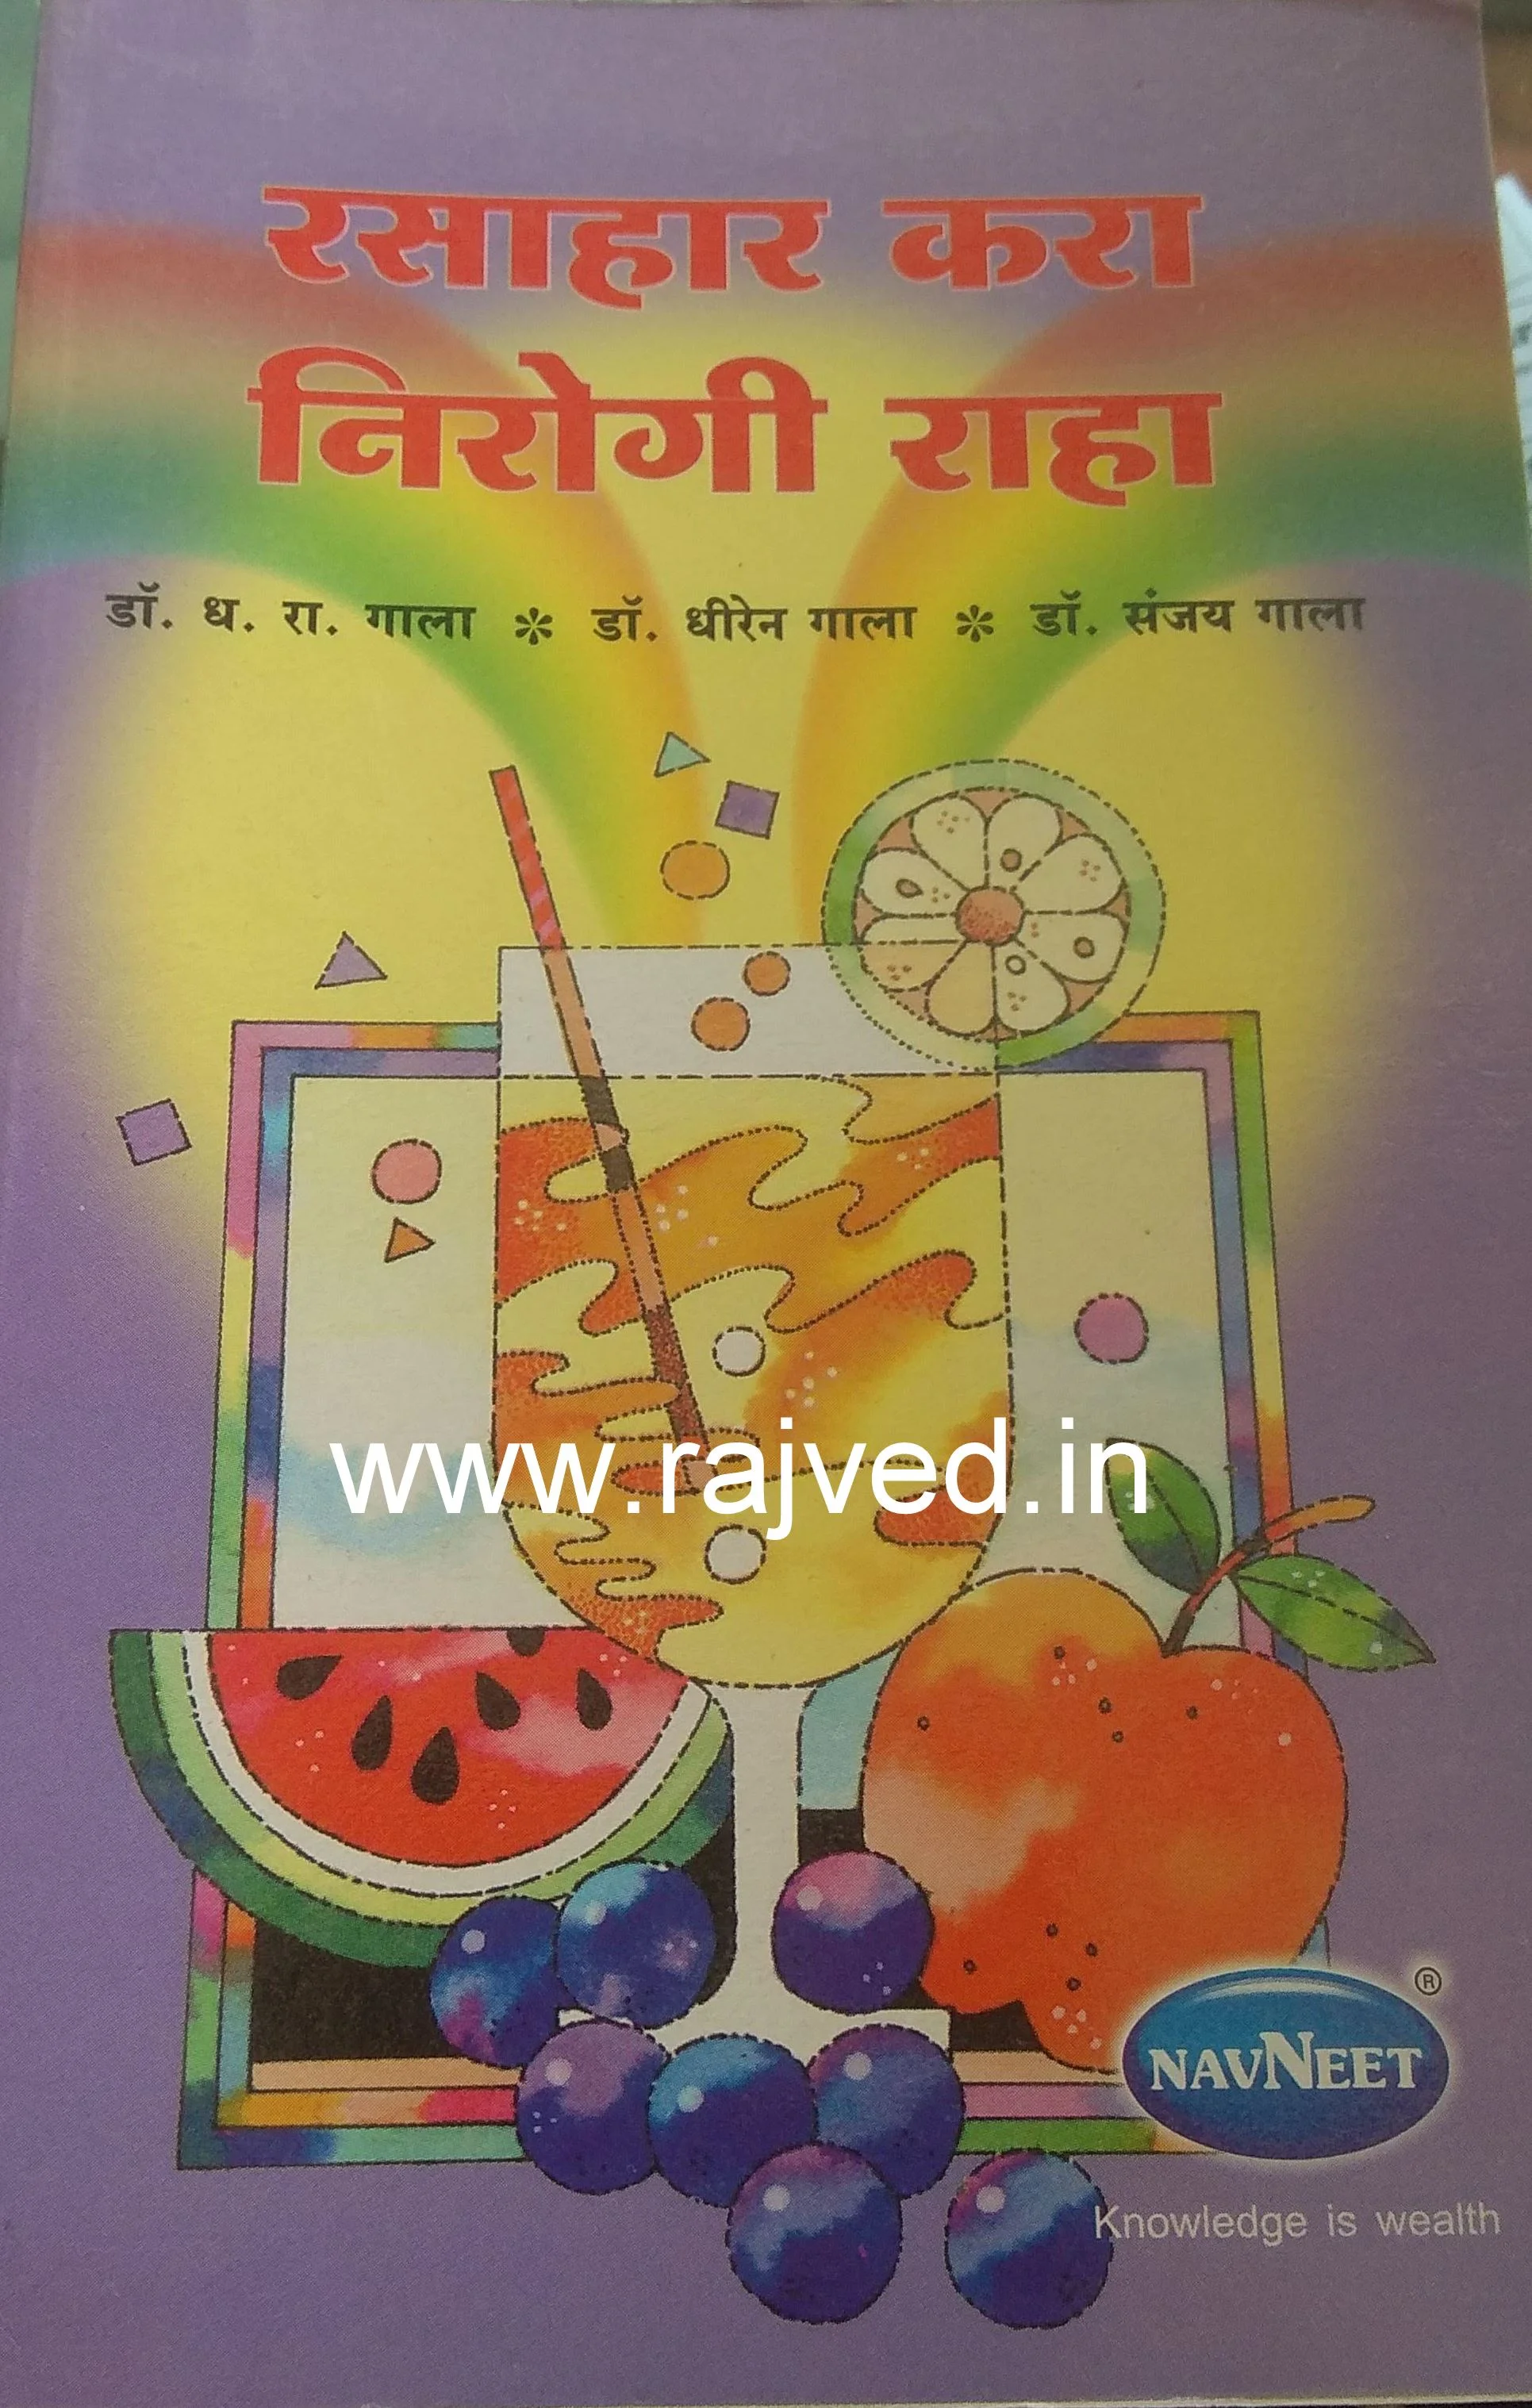 rasahar kara nirogi raha by dr.D.R.gala, dr.dheeren gala, dr.sanjay gala navneet publications marathi edition